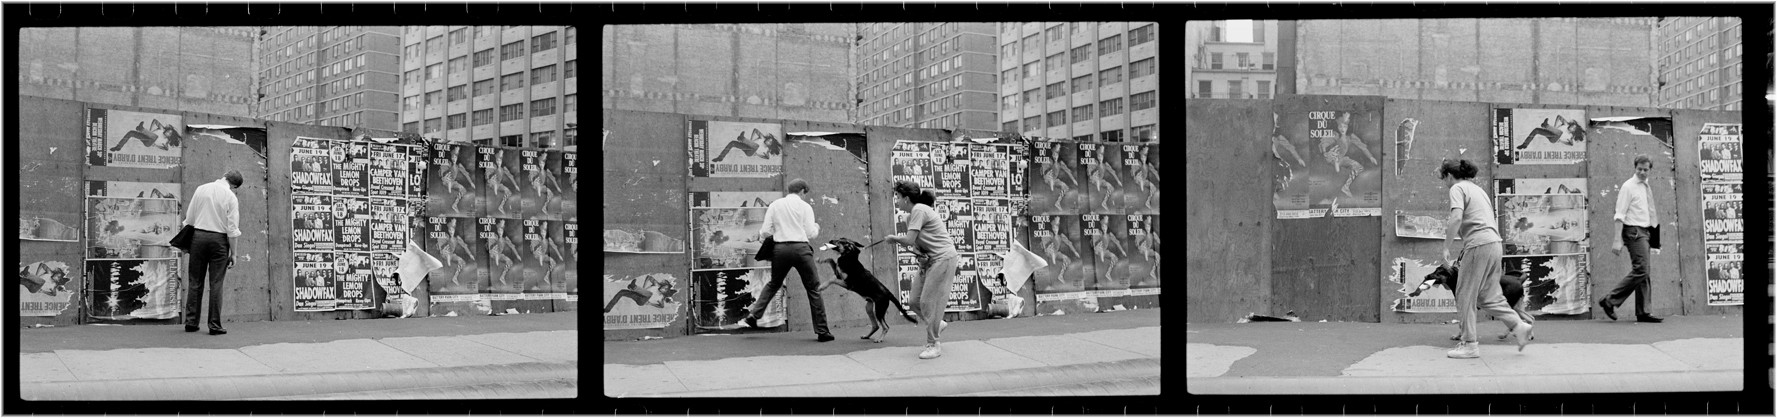 Нападение, триптих, Нью-Йорк, 1988. Фотограф Мэтт Вебер